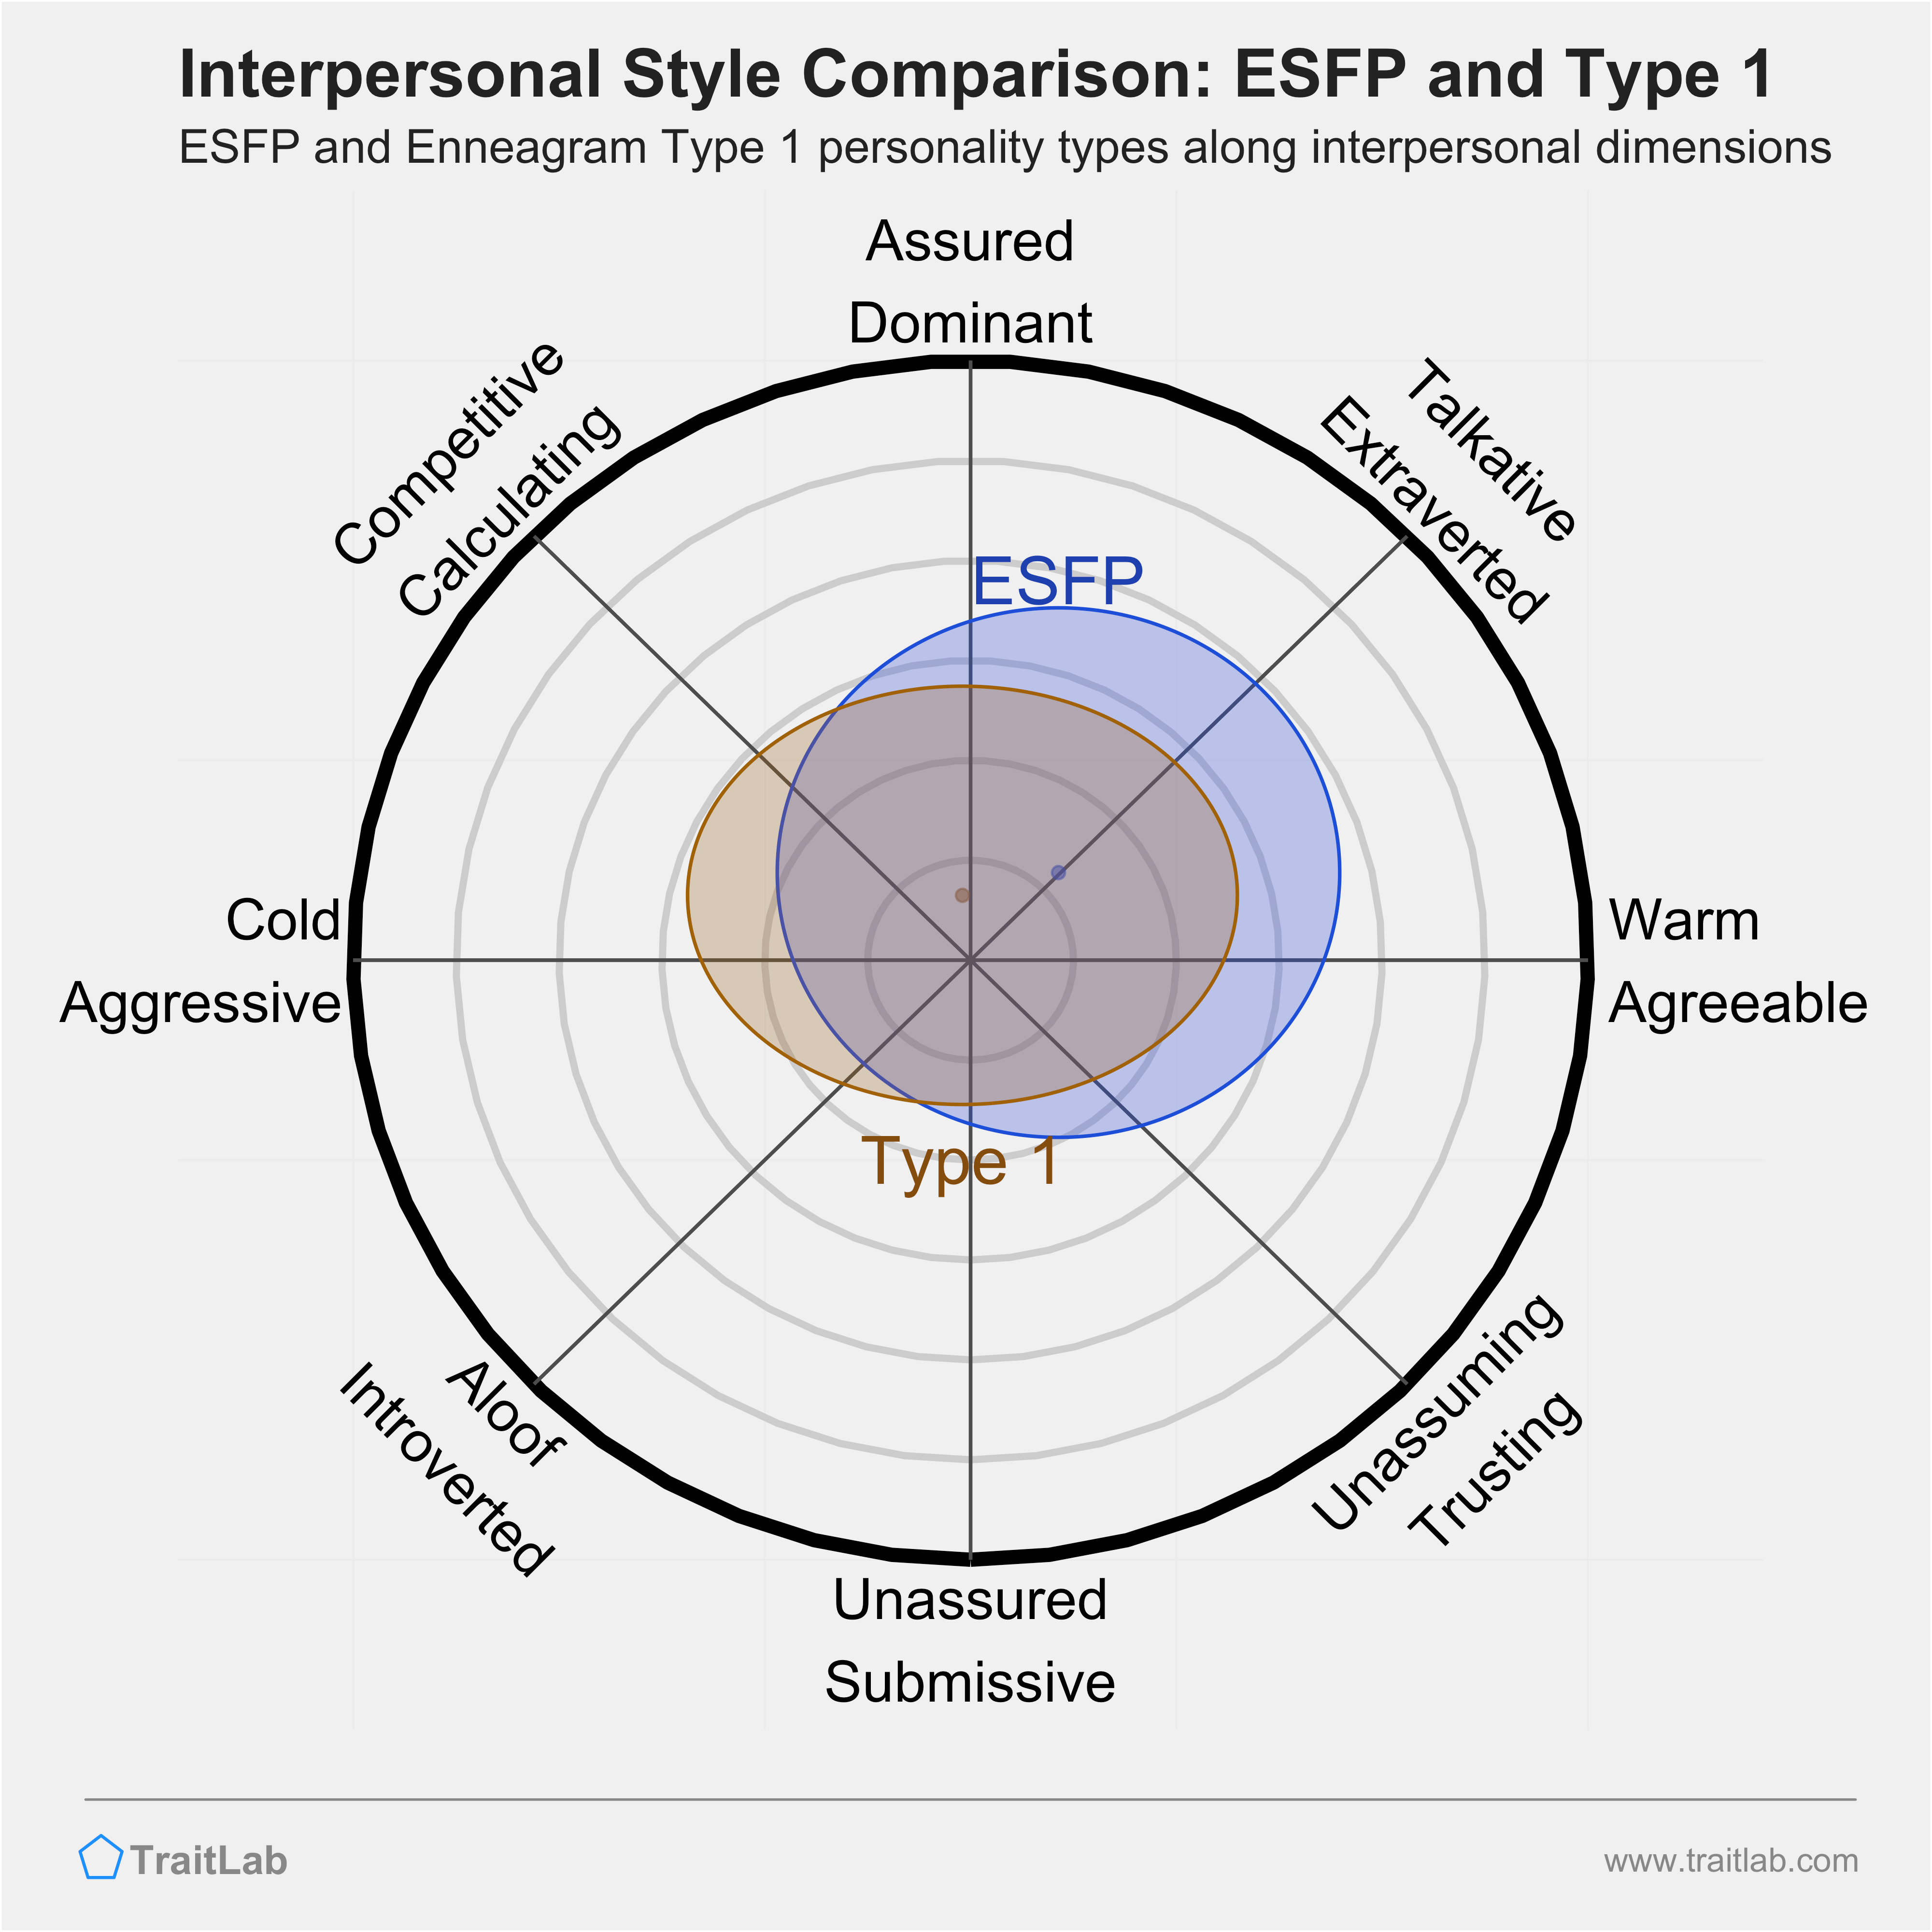 Enneagram ESFP and Type 1 comparison across interpersonal dimensions